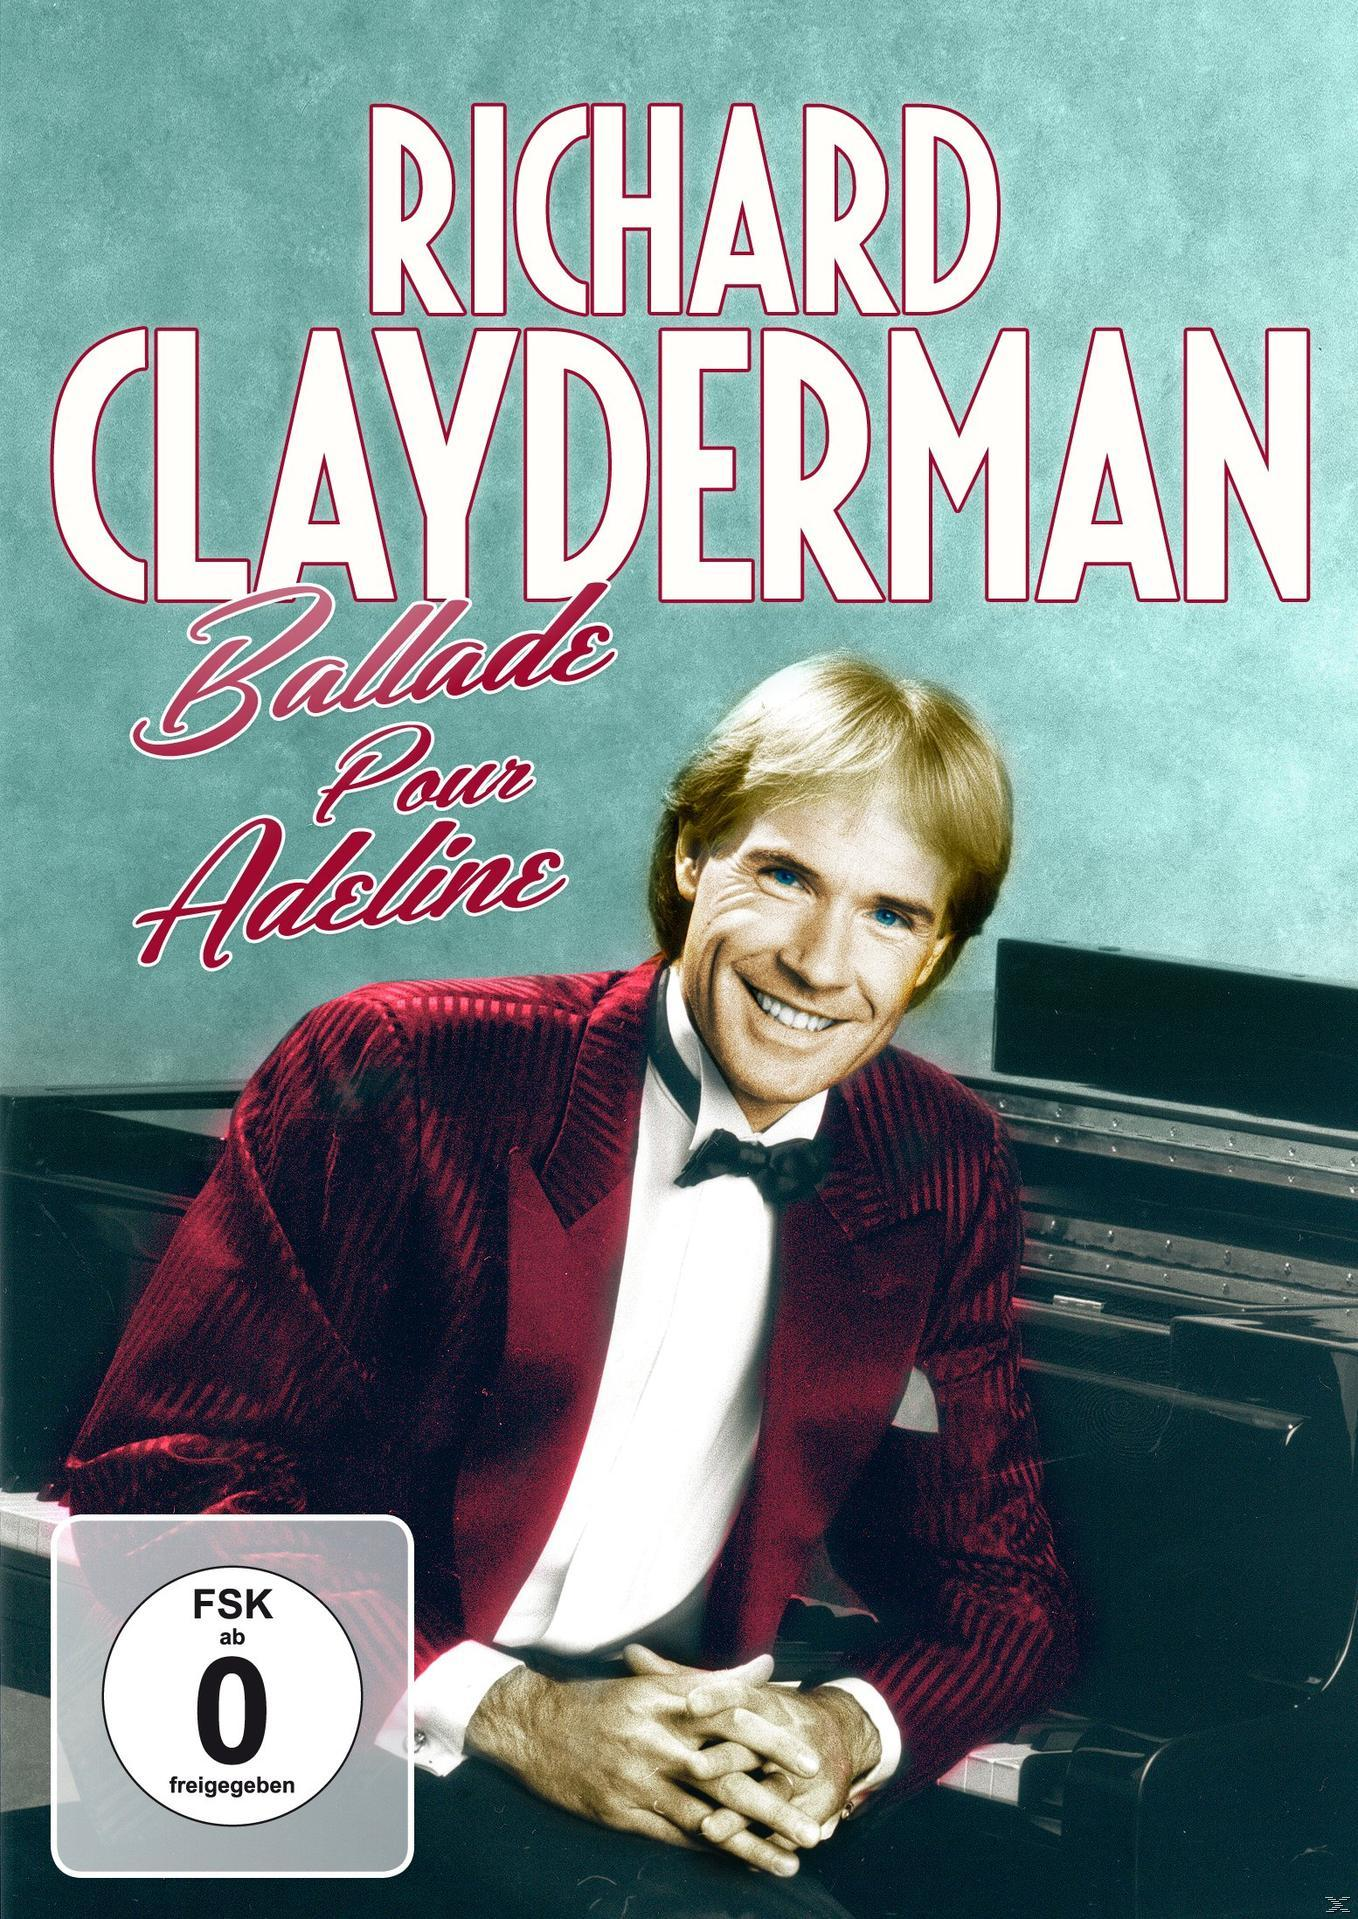 Richard Clayderman - - His (DVD) Ballade Adeline: Greatest Pour Hits